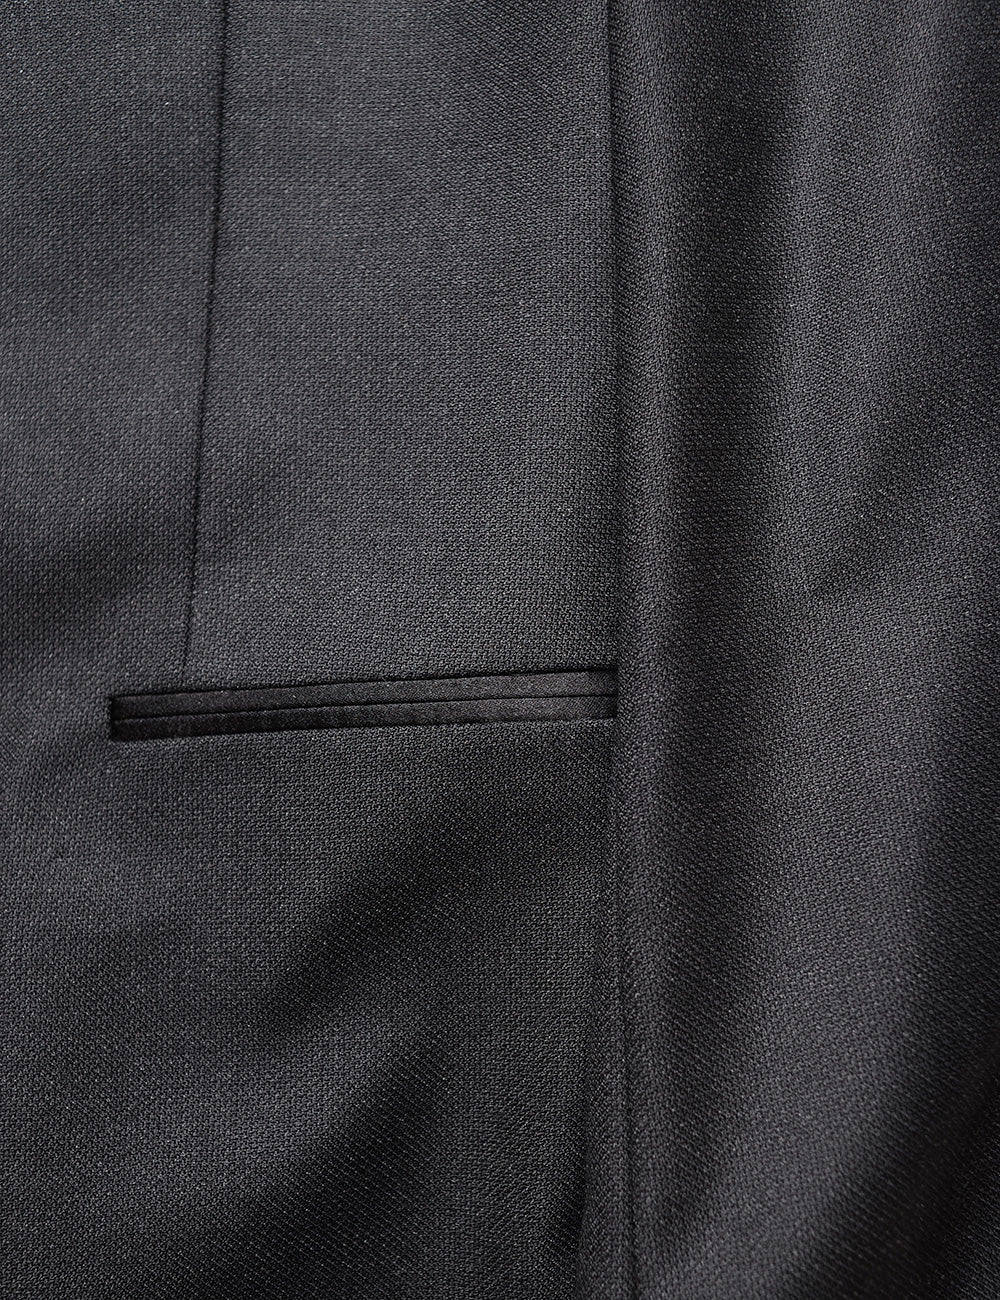 BKT50 Shawl Collar Tuxedo Jacket in Tonal Birdseye - Black with Satin Lapel